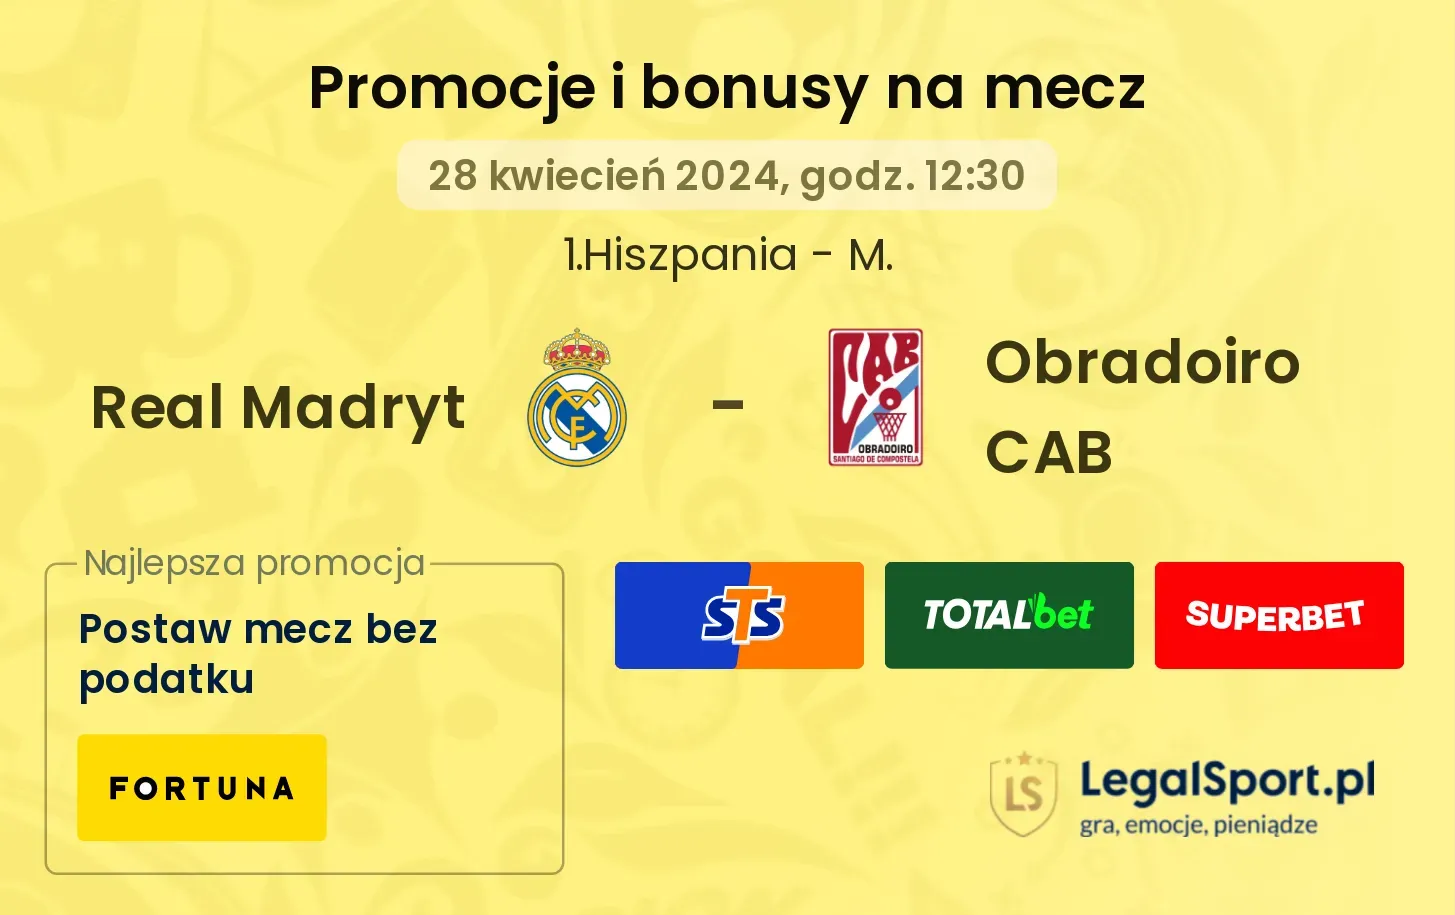 Real Madryt - Obradoiro CAB promocje bonusy na mecz